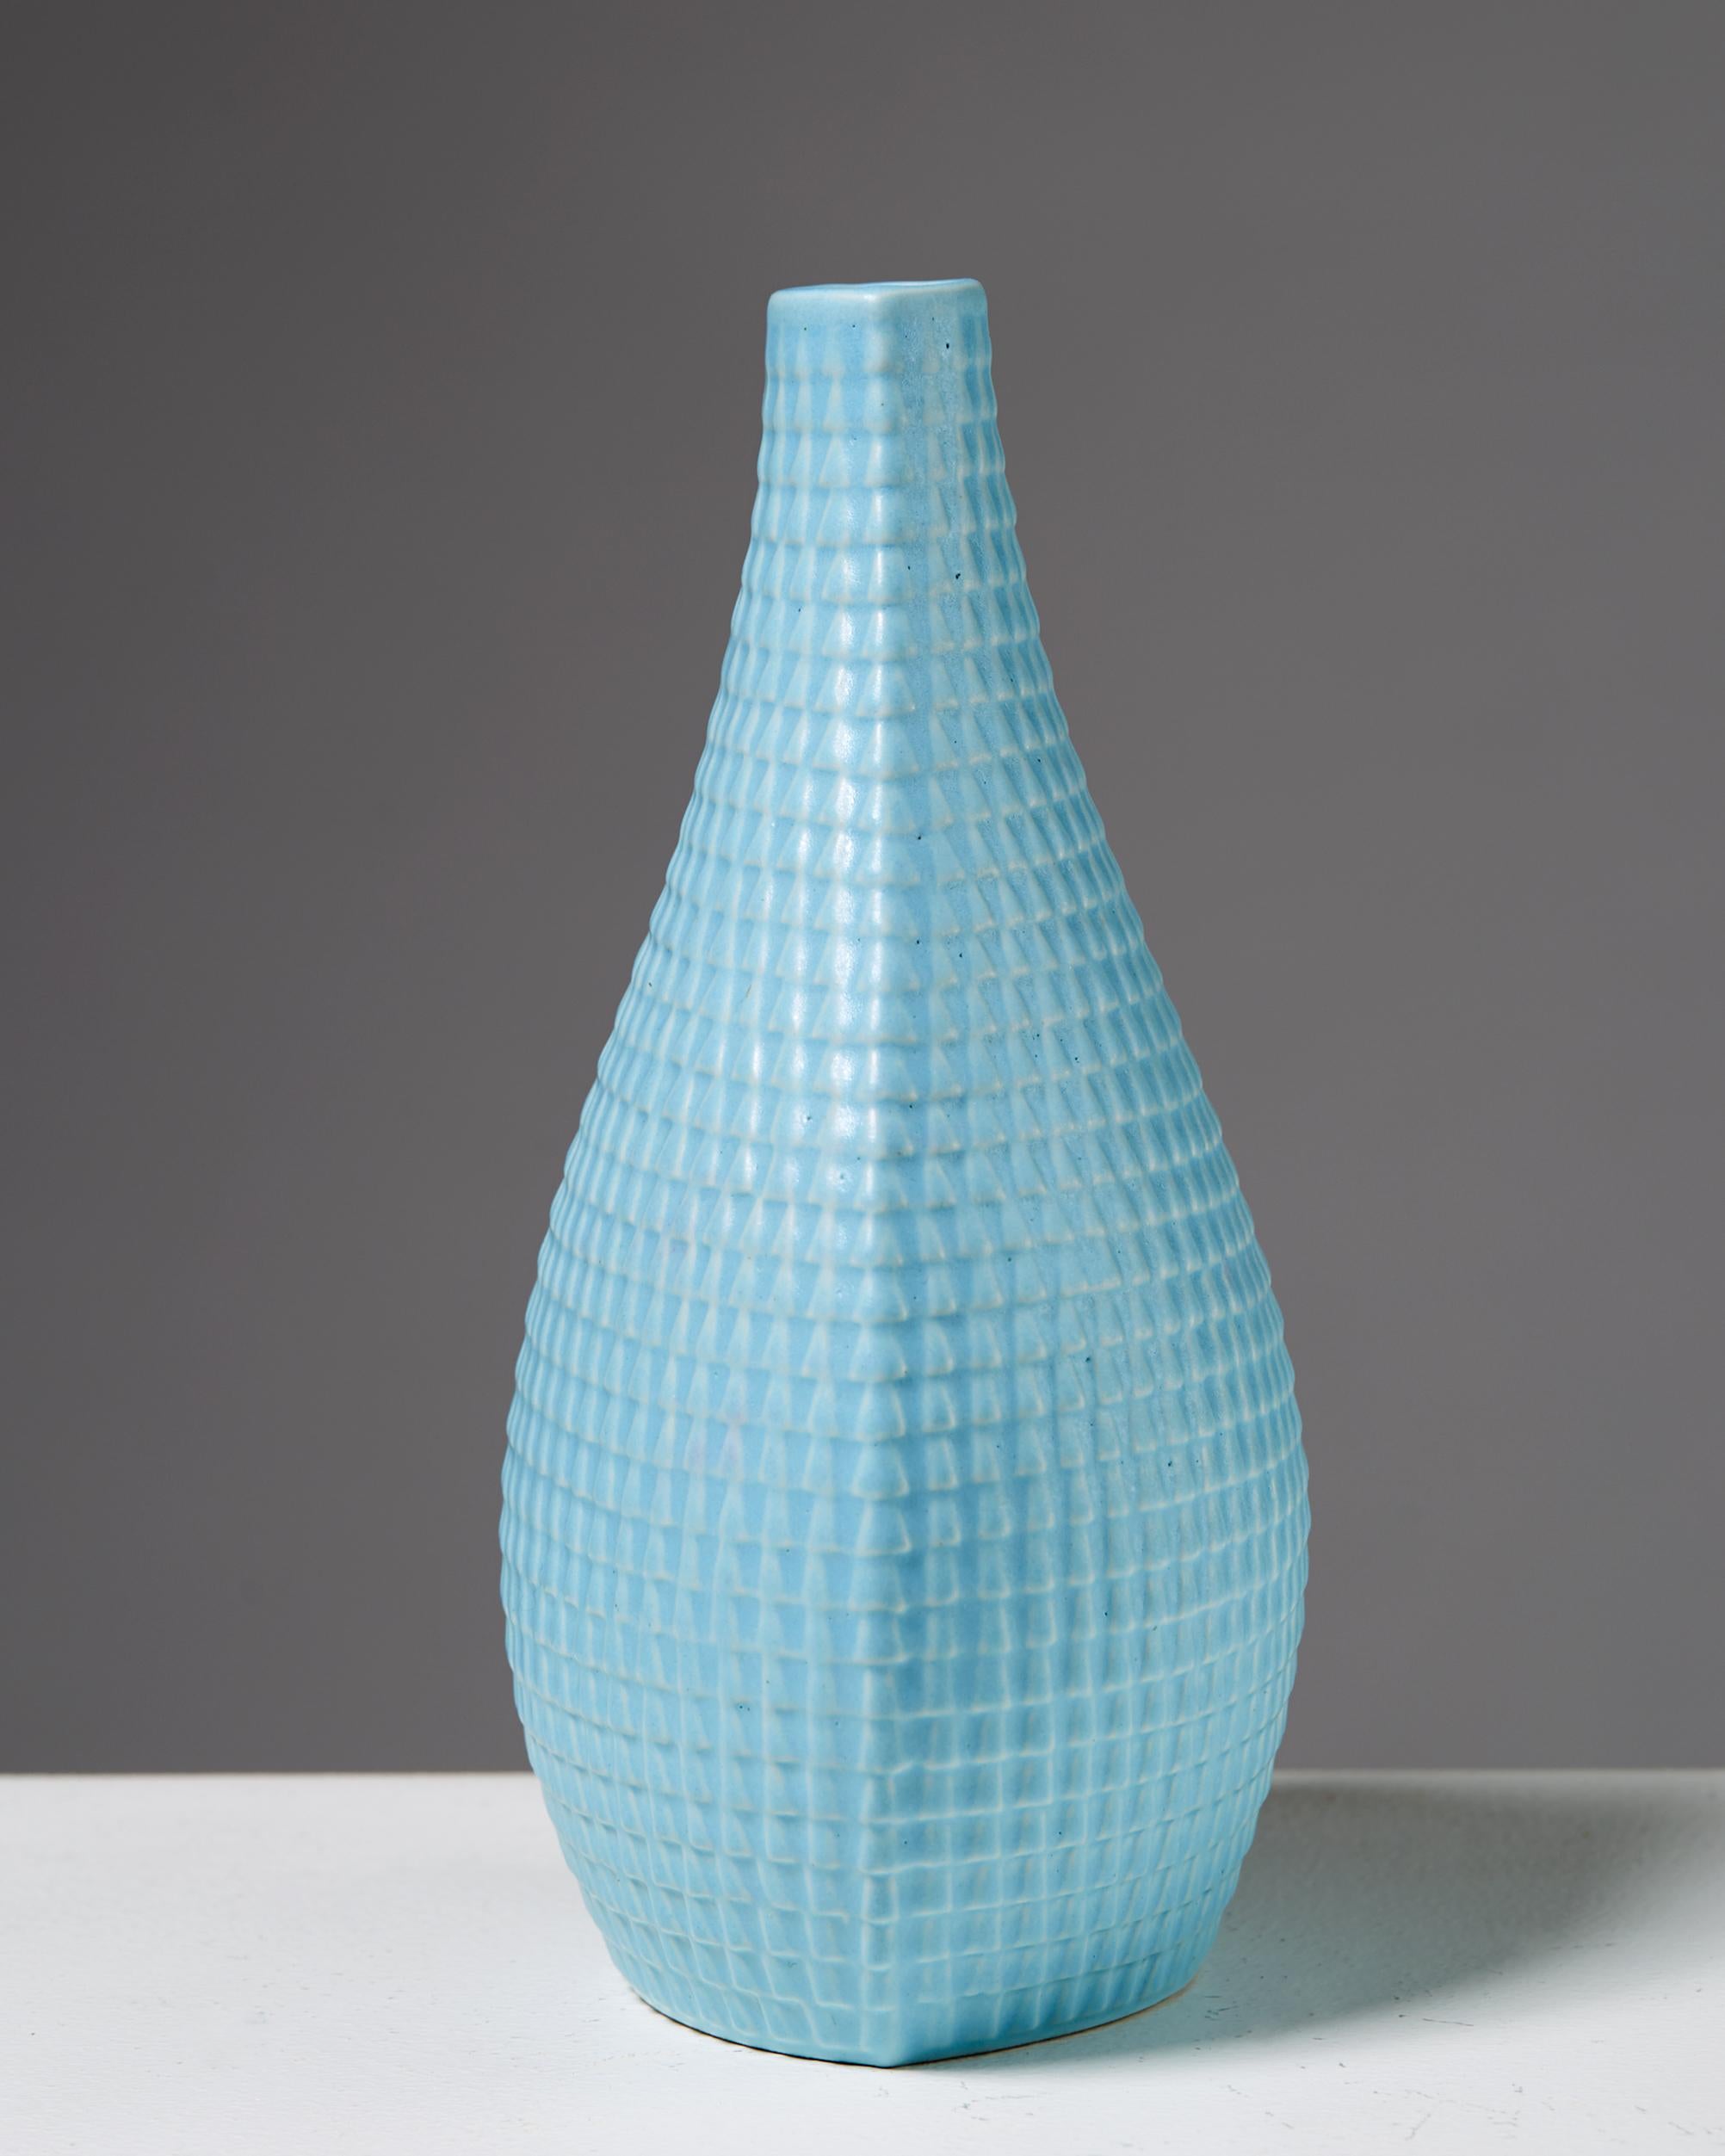 Scandinavian Modern Vase “Reptile” Designed by Stig Lindberg for Gustavsberg, Sweden, 1953